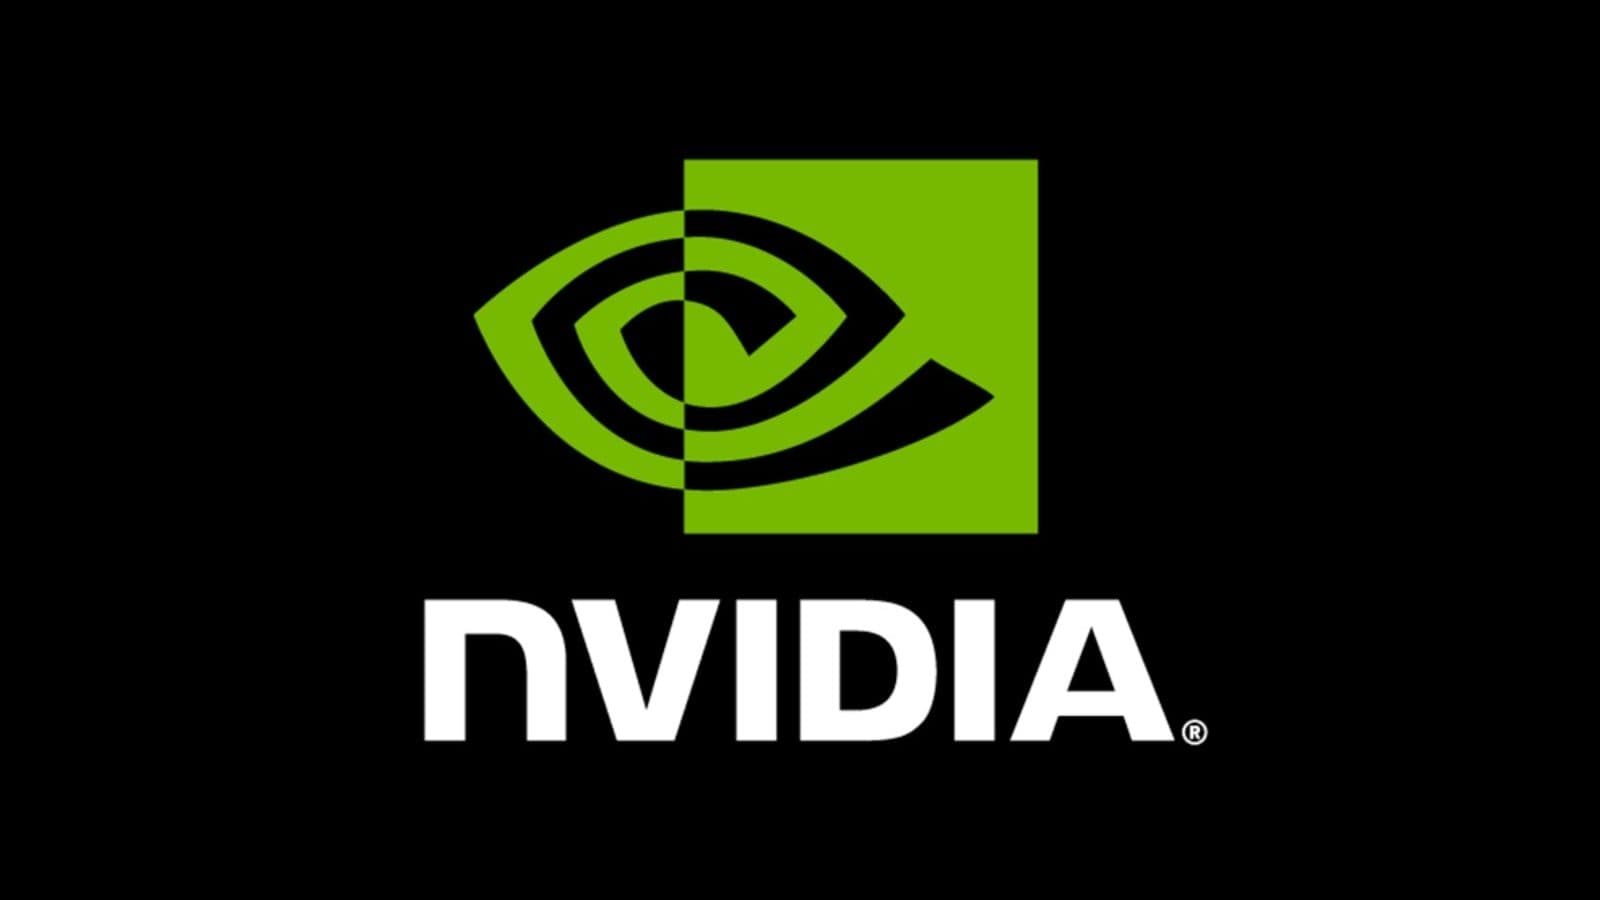 Nvidia ha estado expuesta a una brecha de seguridad cibernética, una empresa investiga el asunto